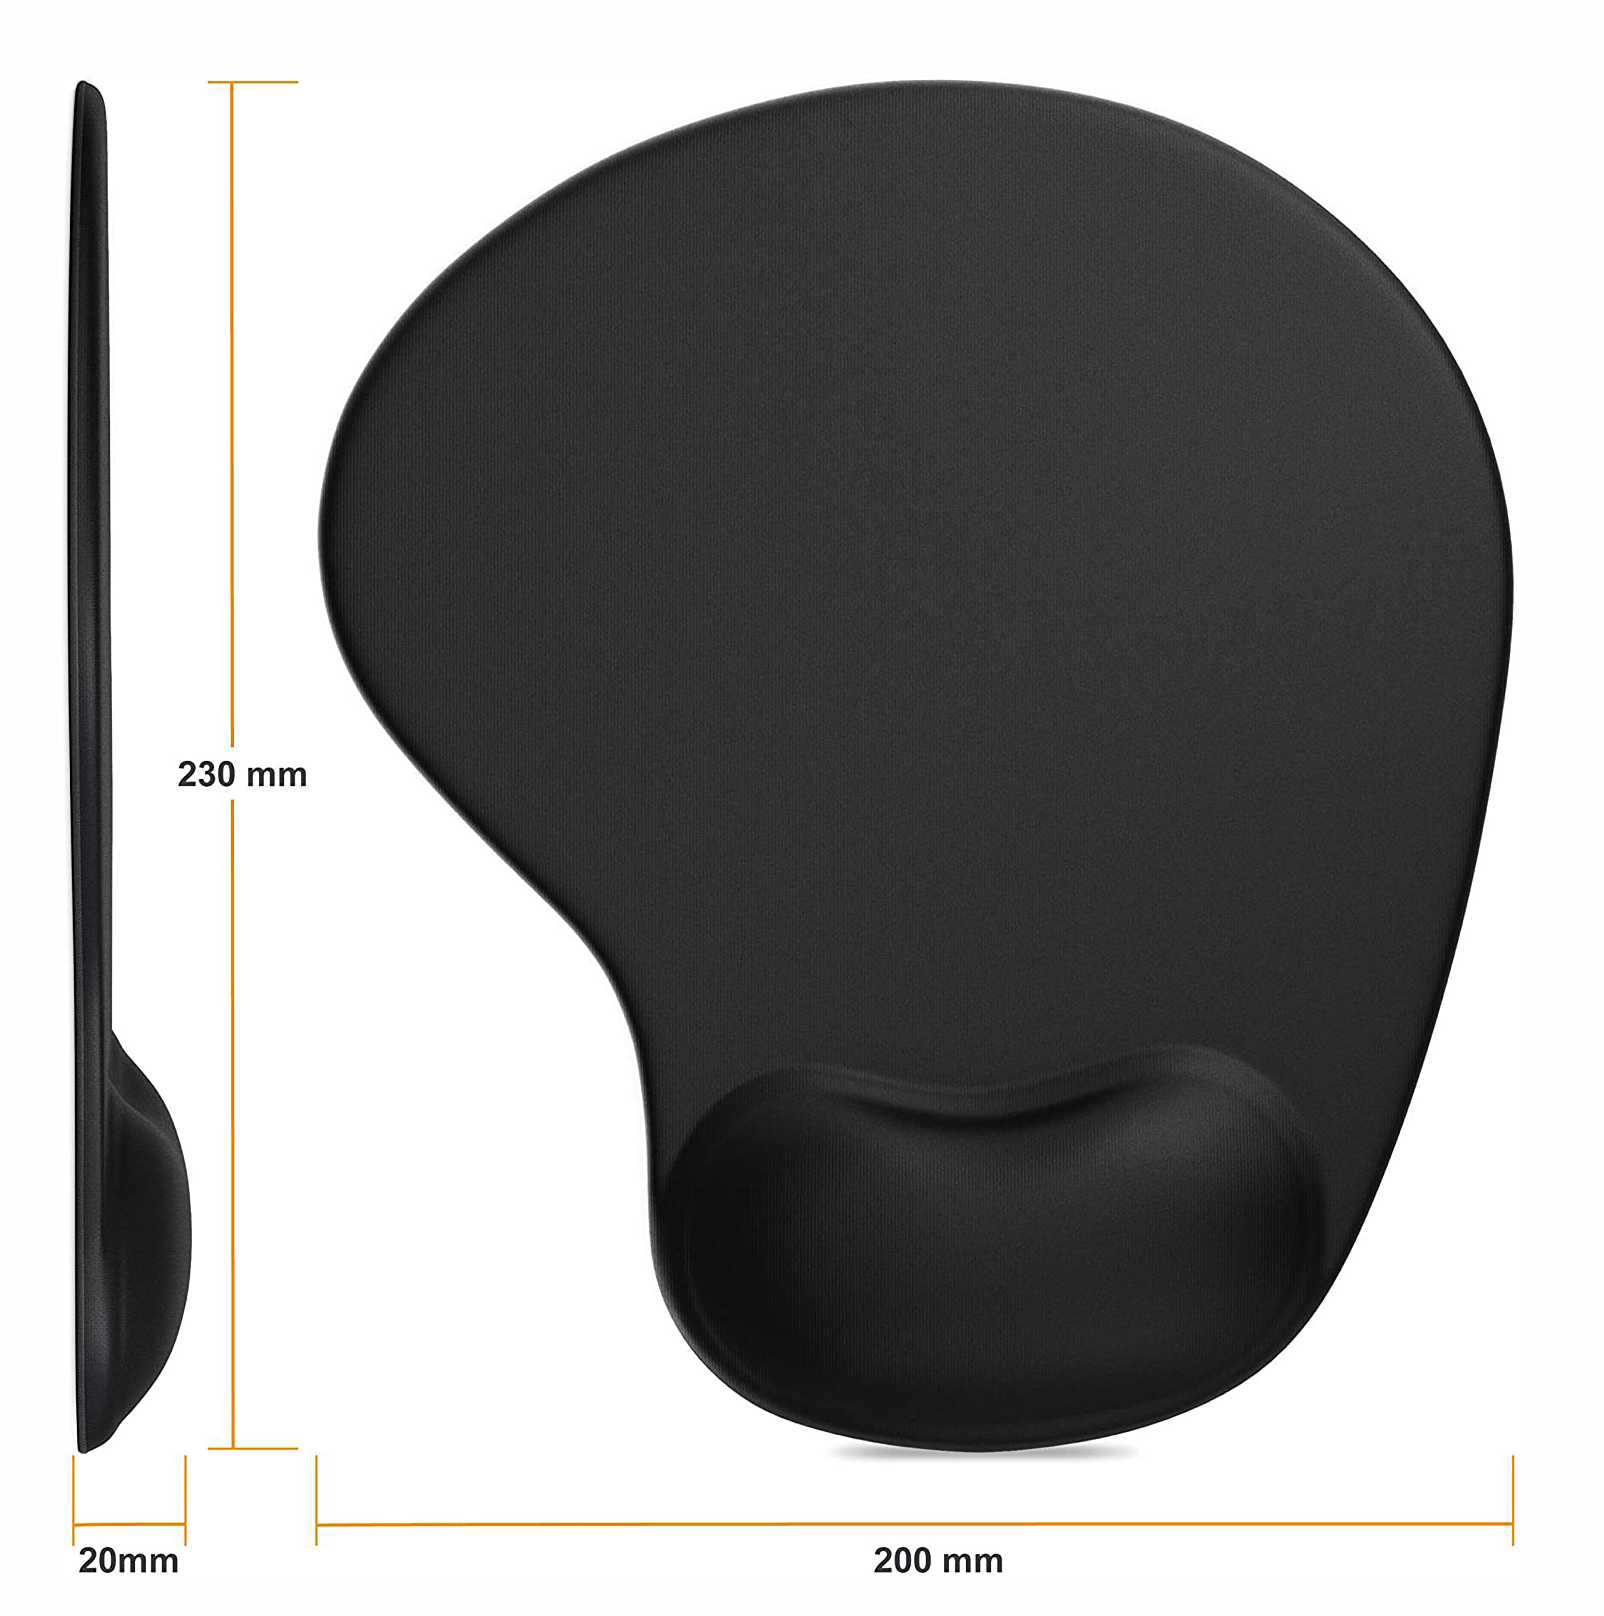 XP Products EBOX P400 Mouse Pad Bantex Gel%20(11)